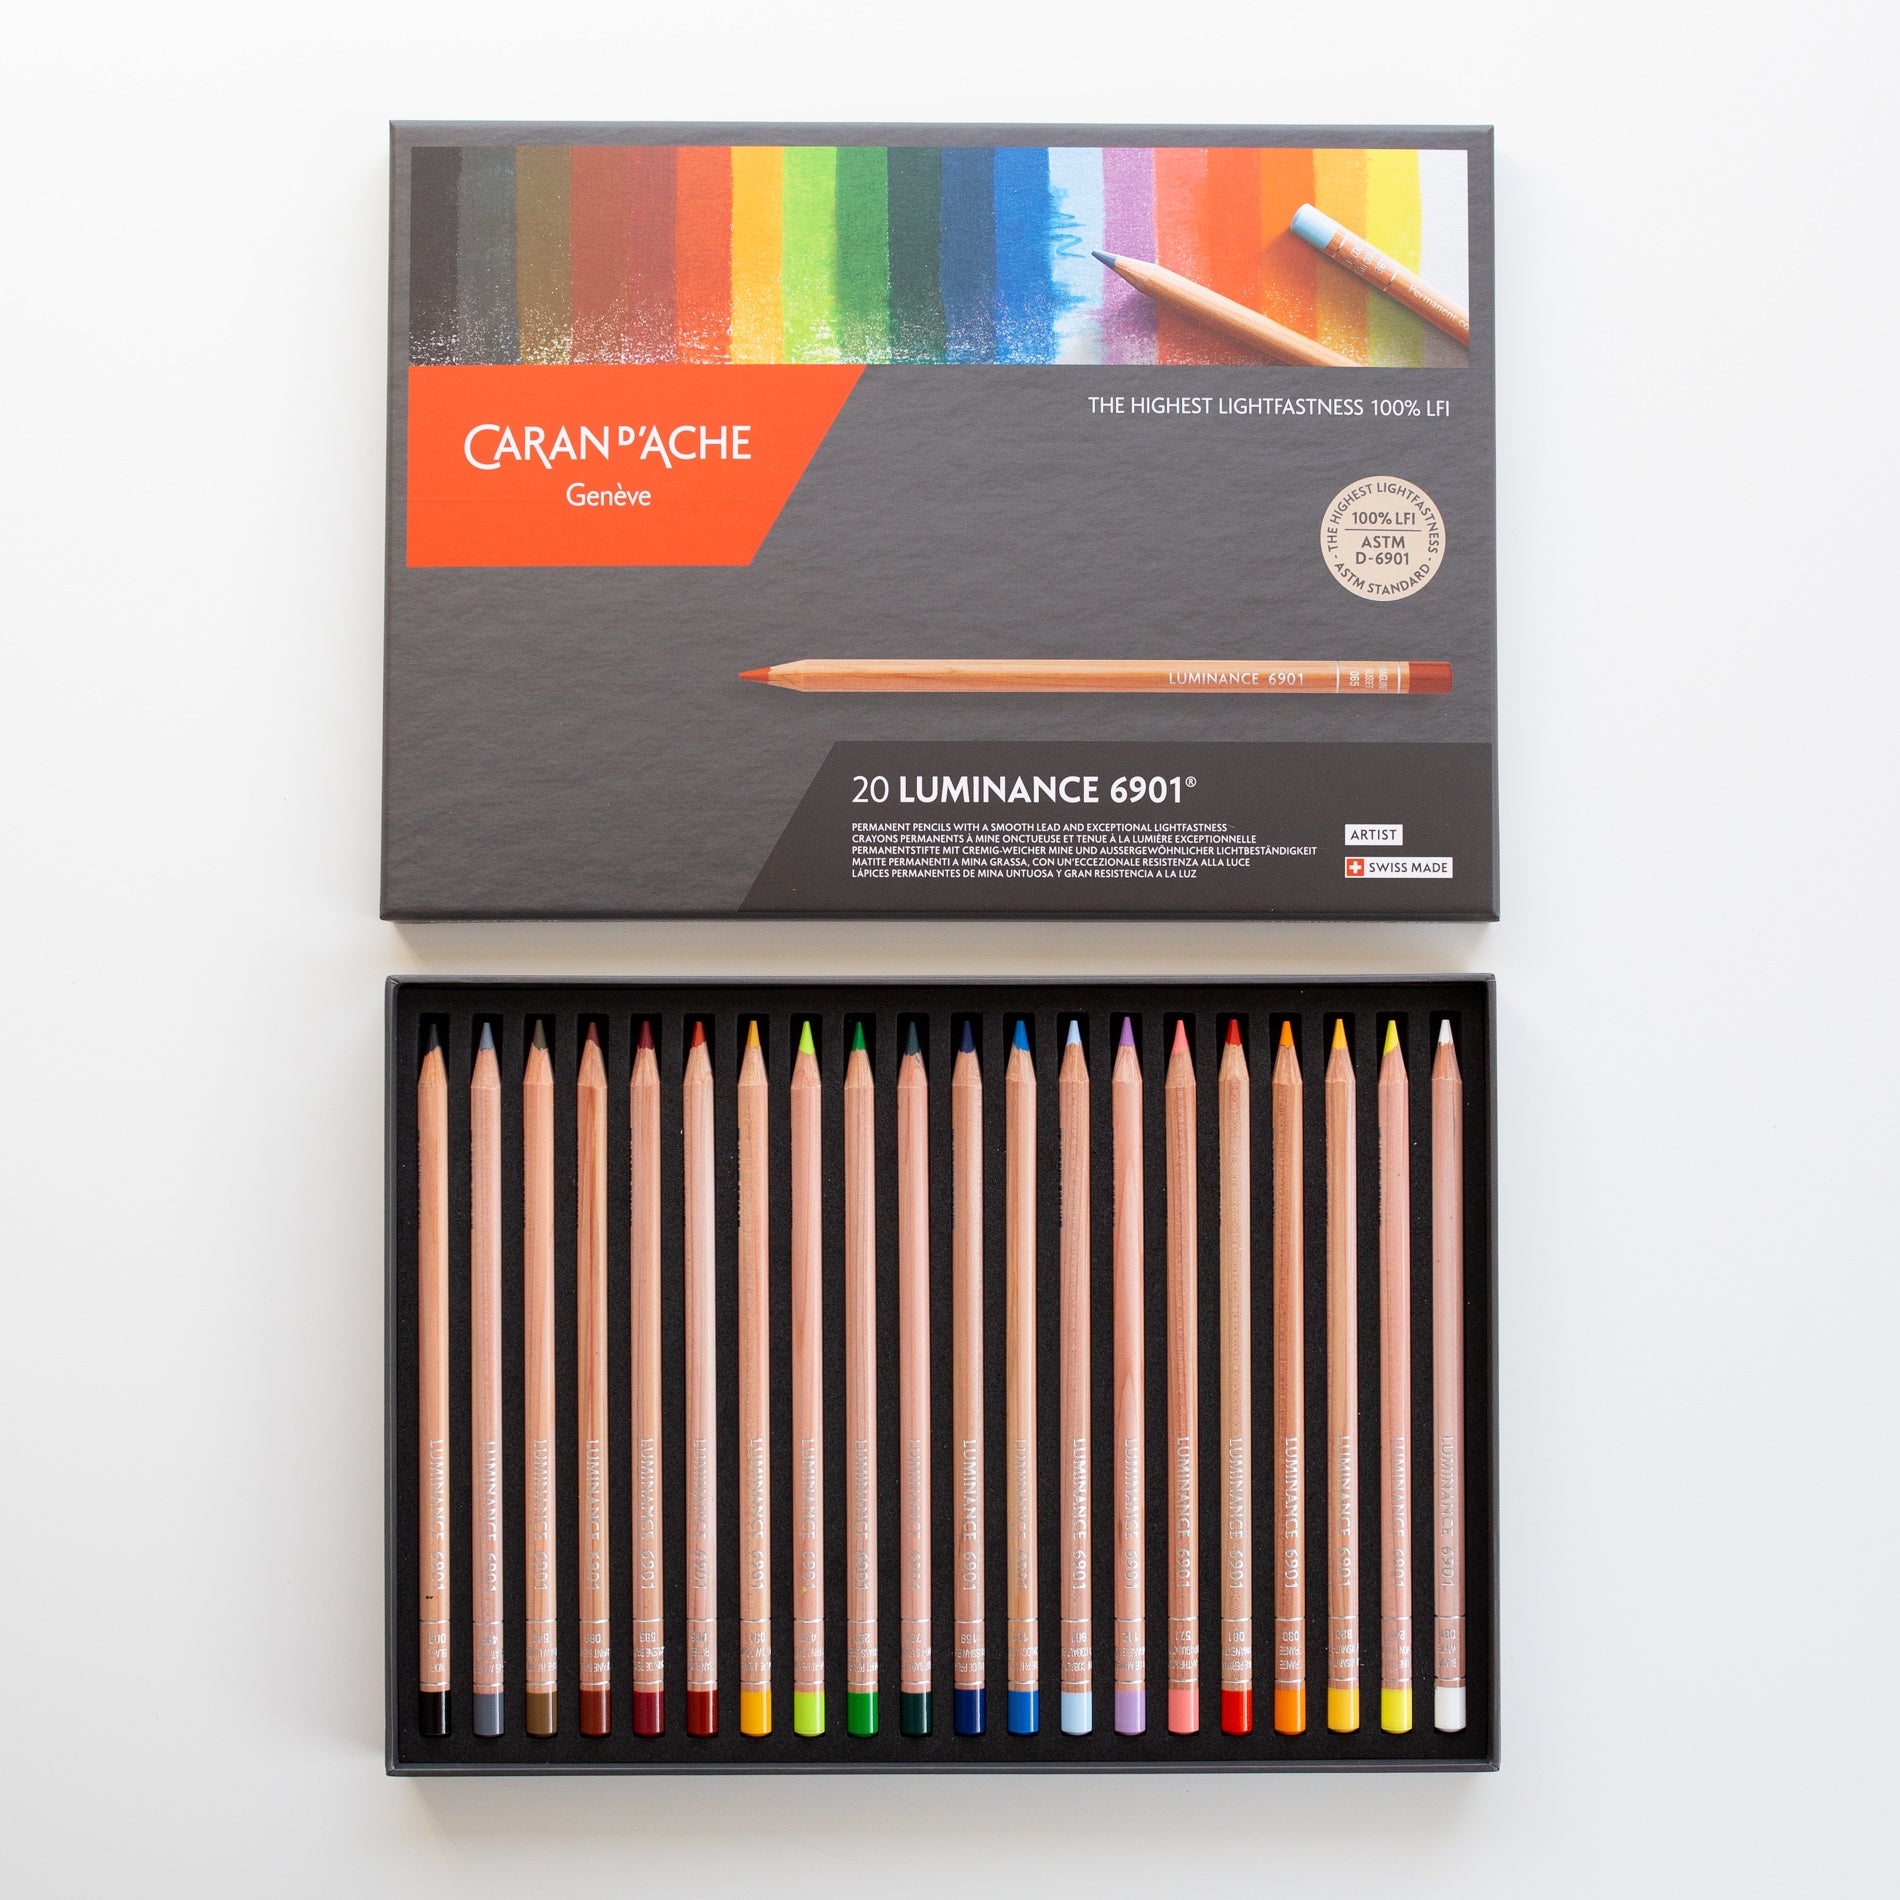 Caran d'Ache Luminance Set of 20, 6901 Colored Pencils